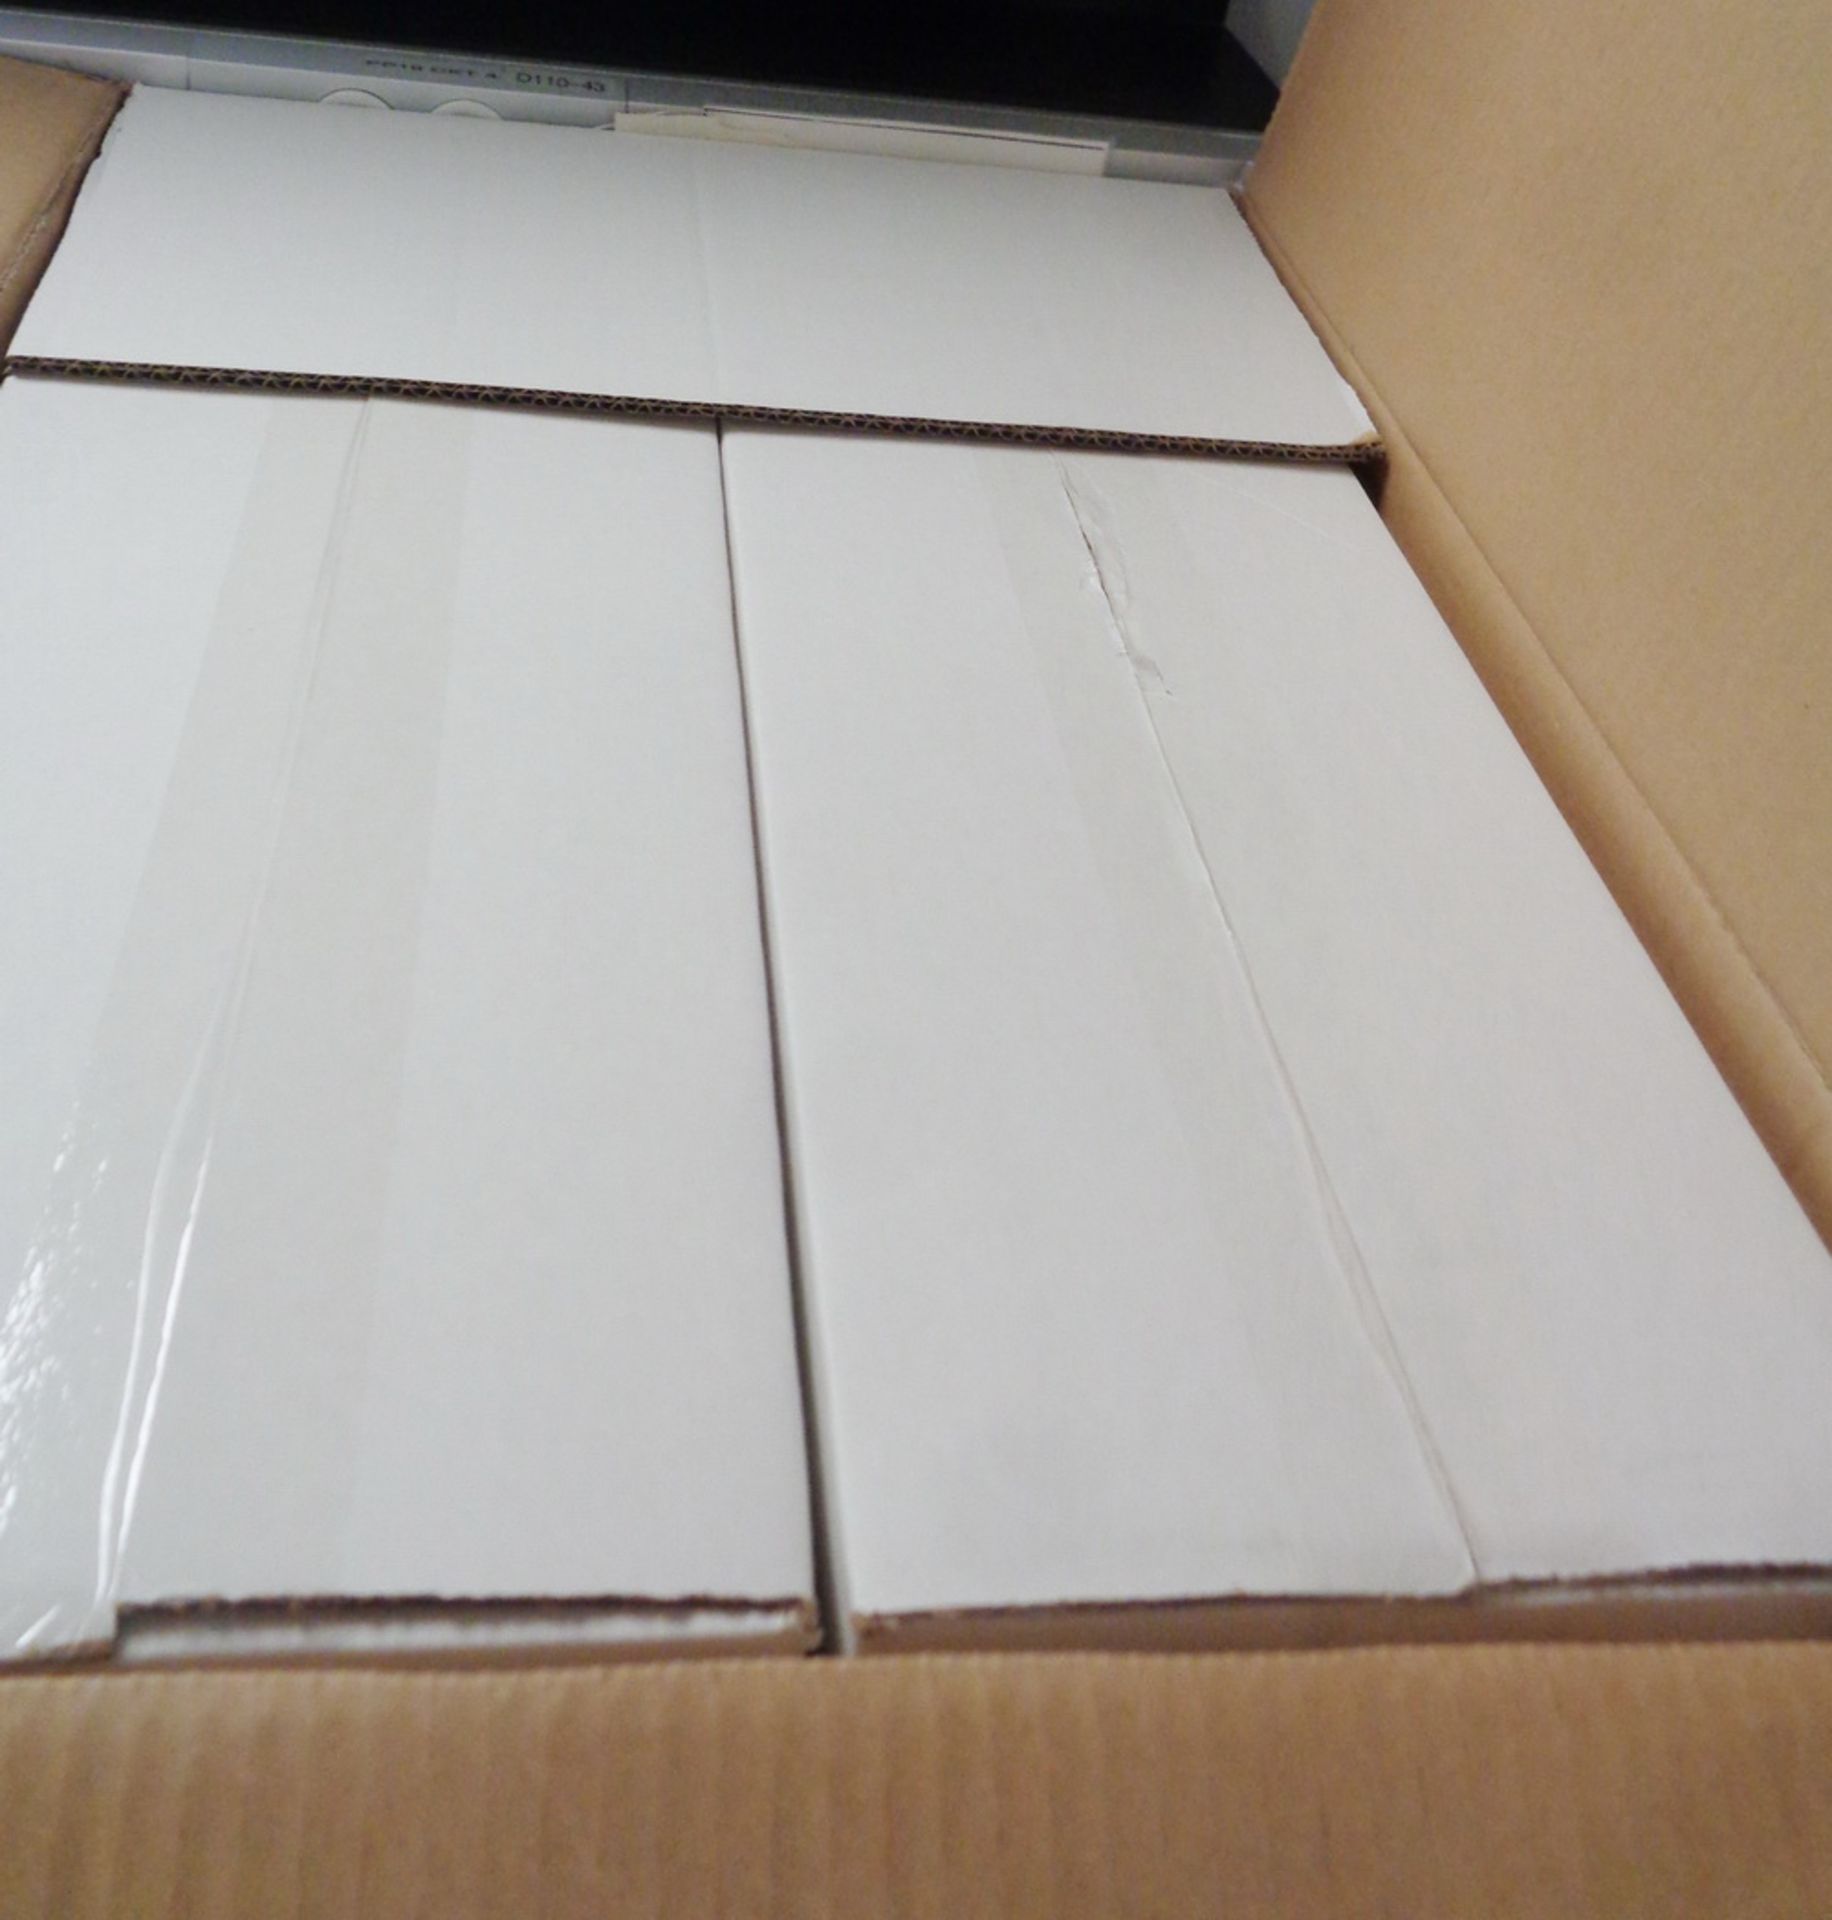 (3) Boxes VWR Tissue Culture Plates, non treated, 48 wells, sterilized